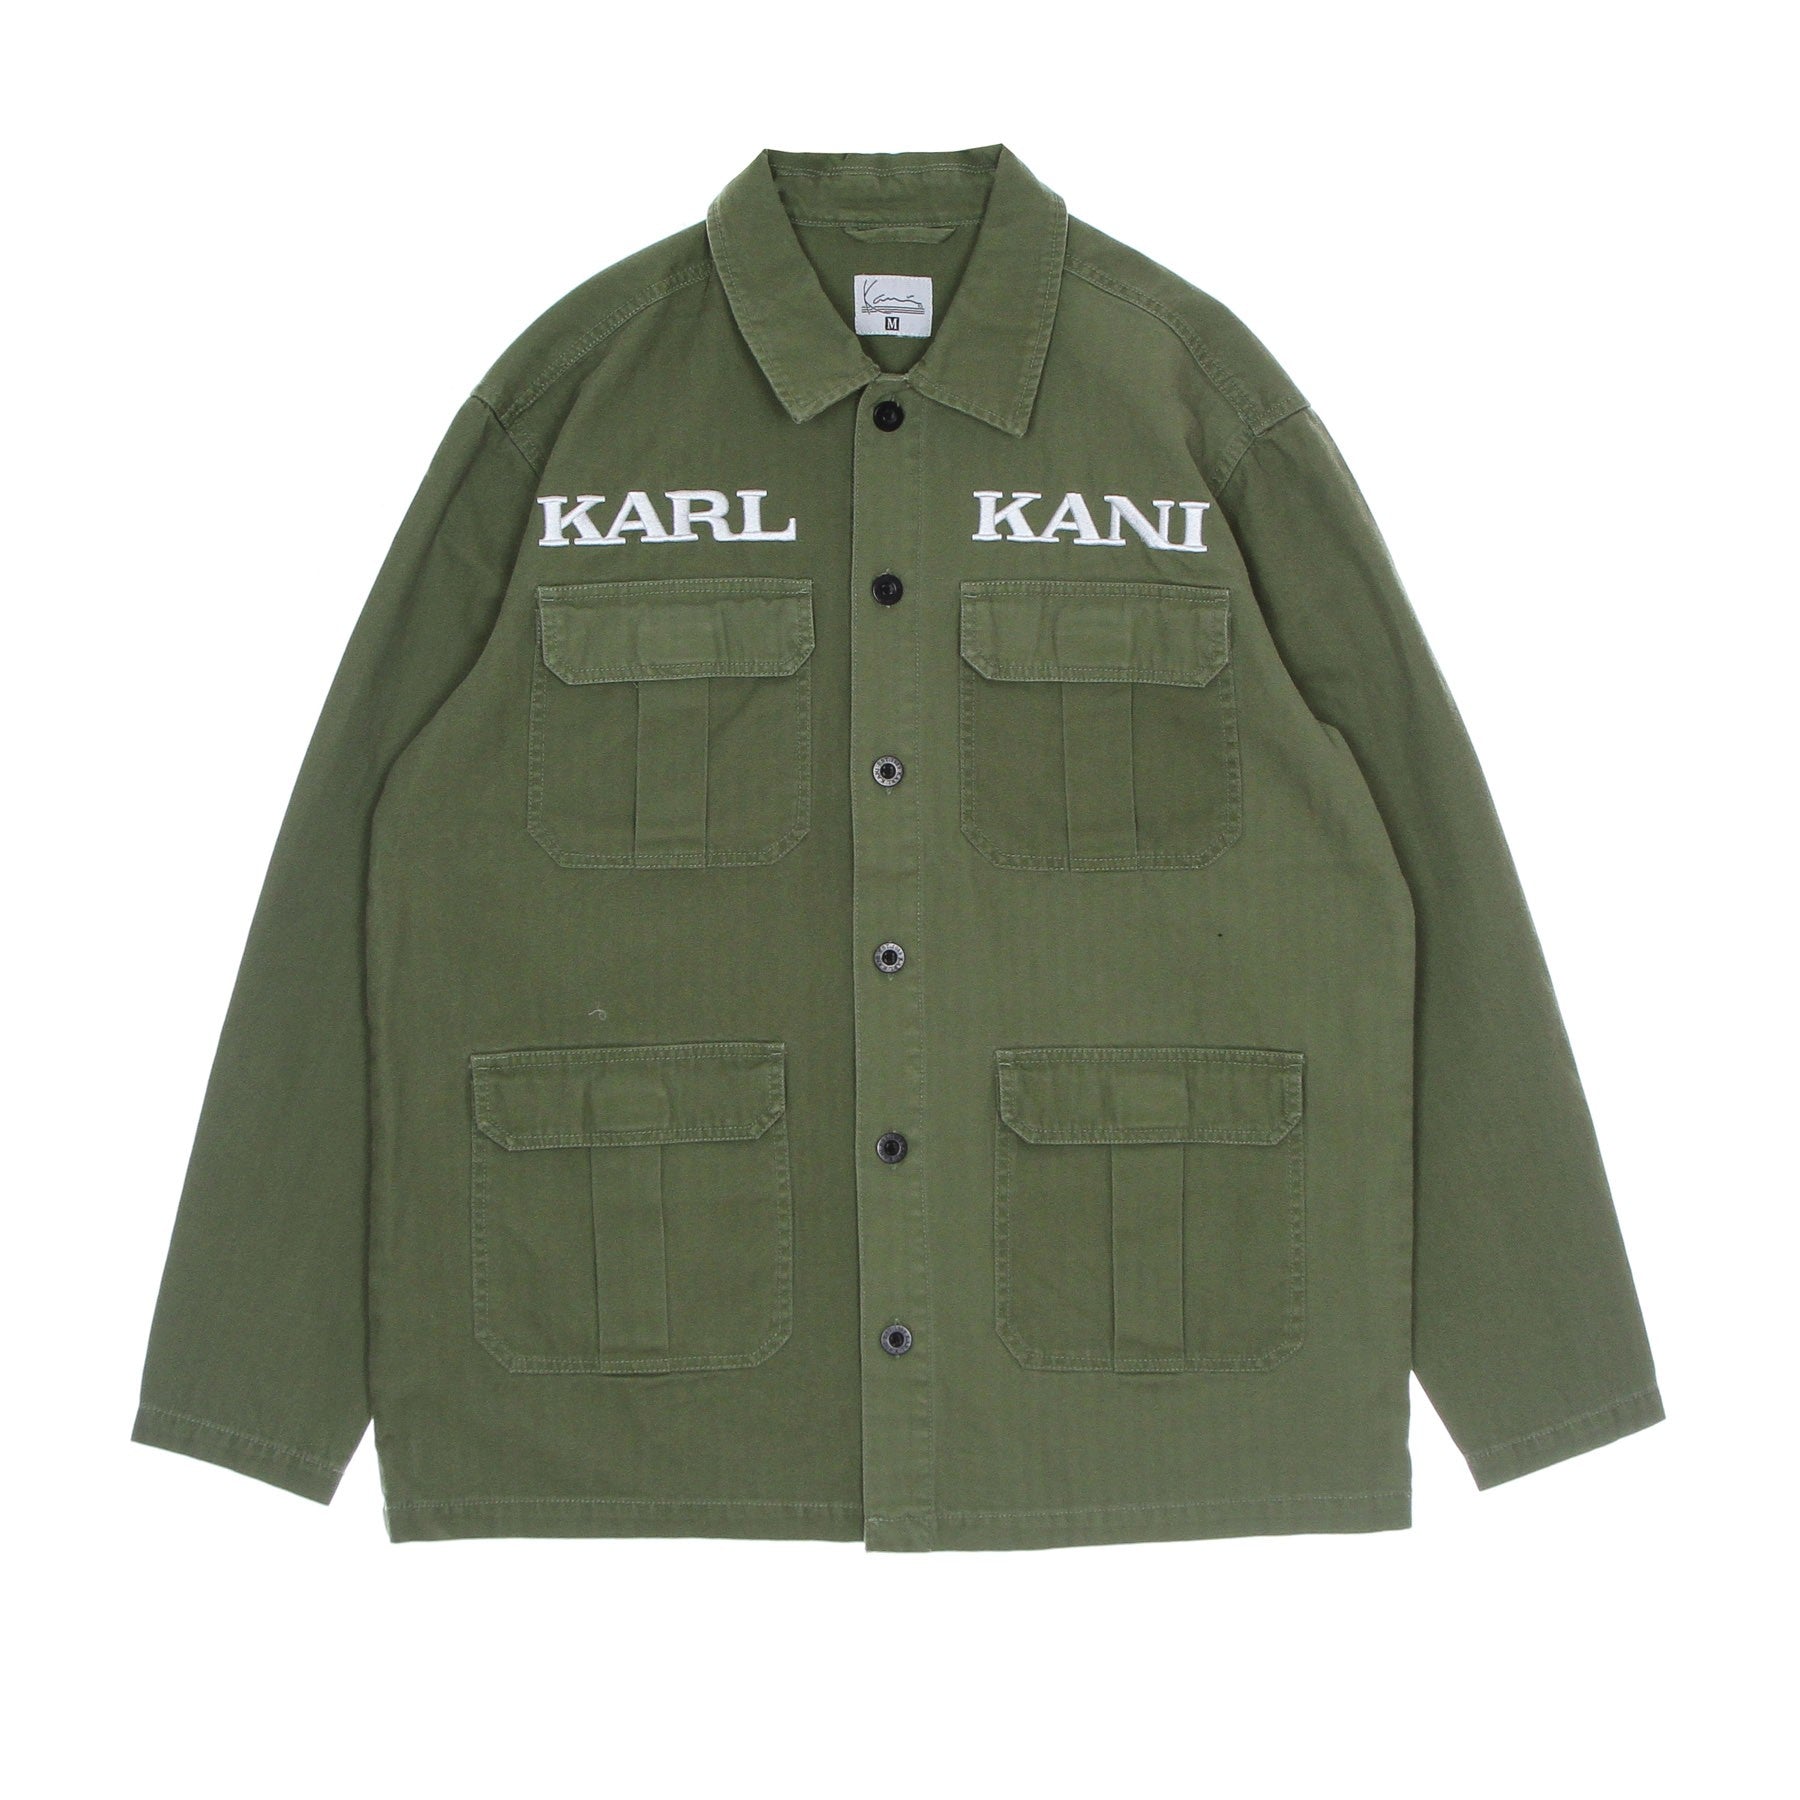 Karl Kani, Giacca Coach Jacket Uomo Retro Washed Utility Shirt Jacket, Dark Green